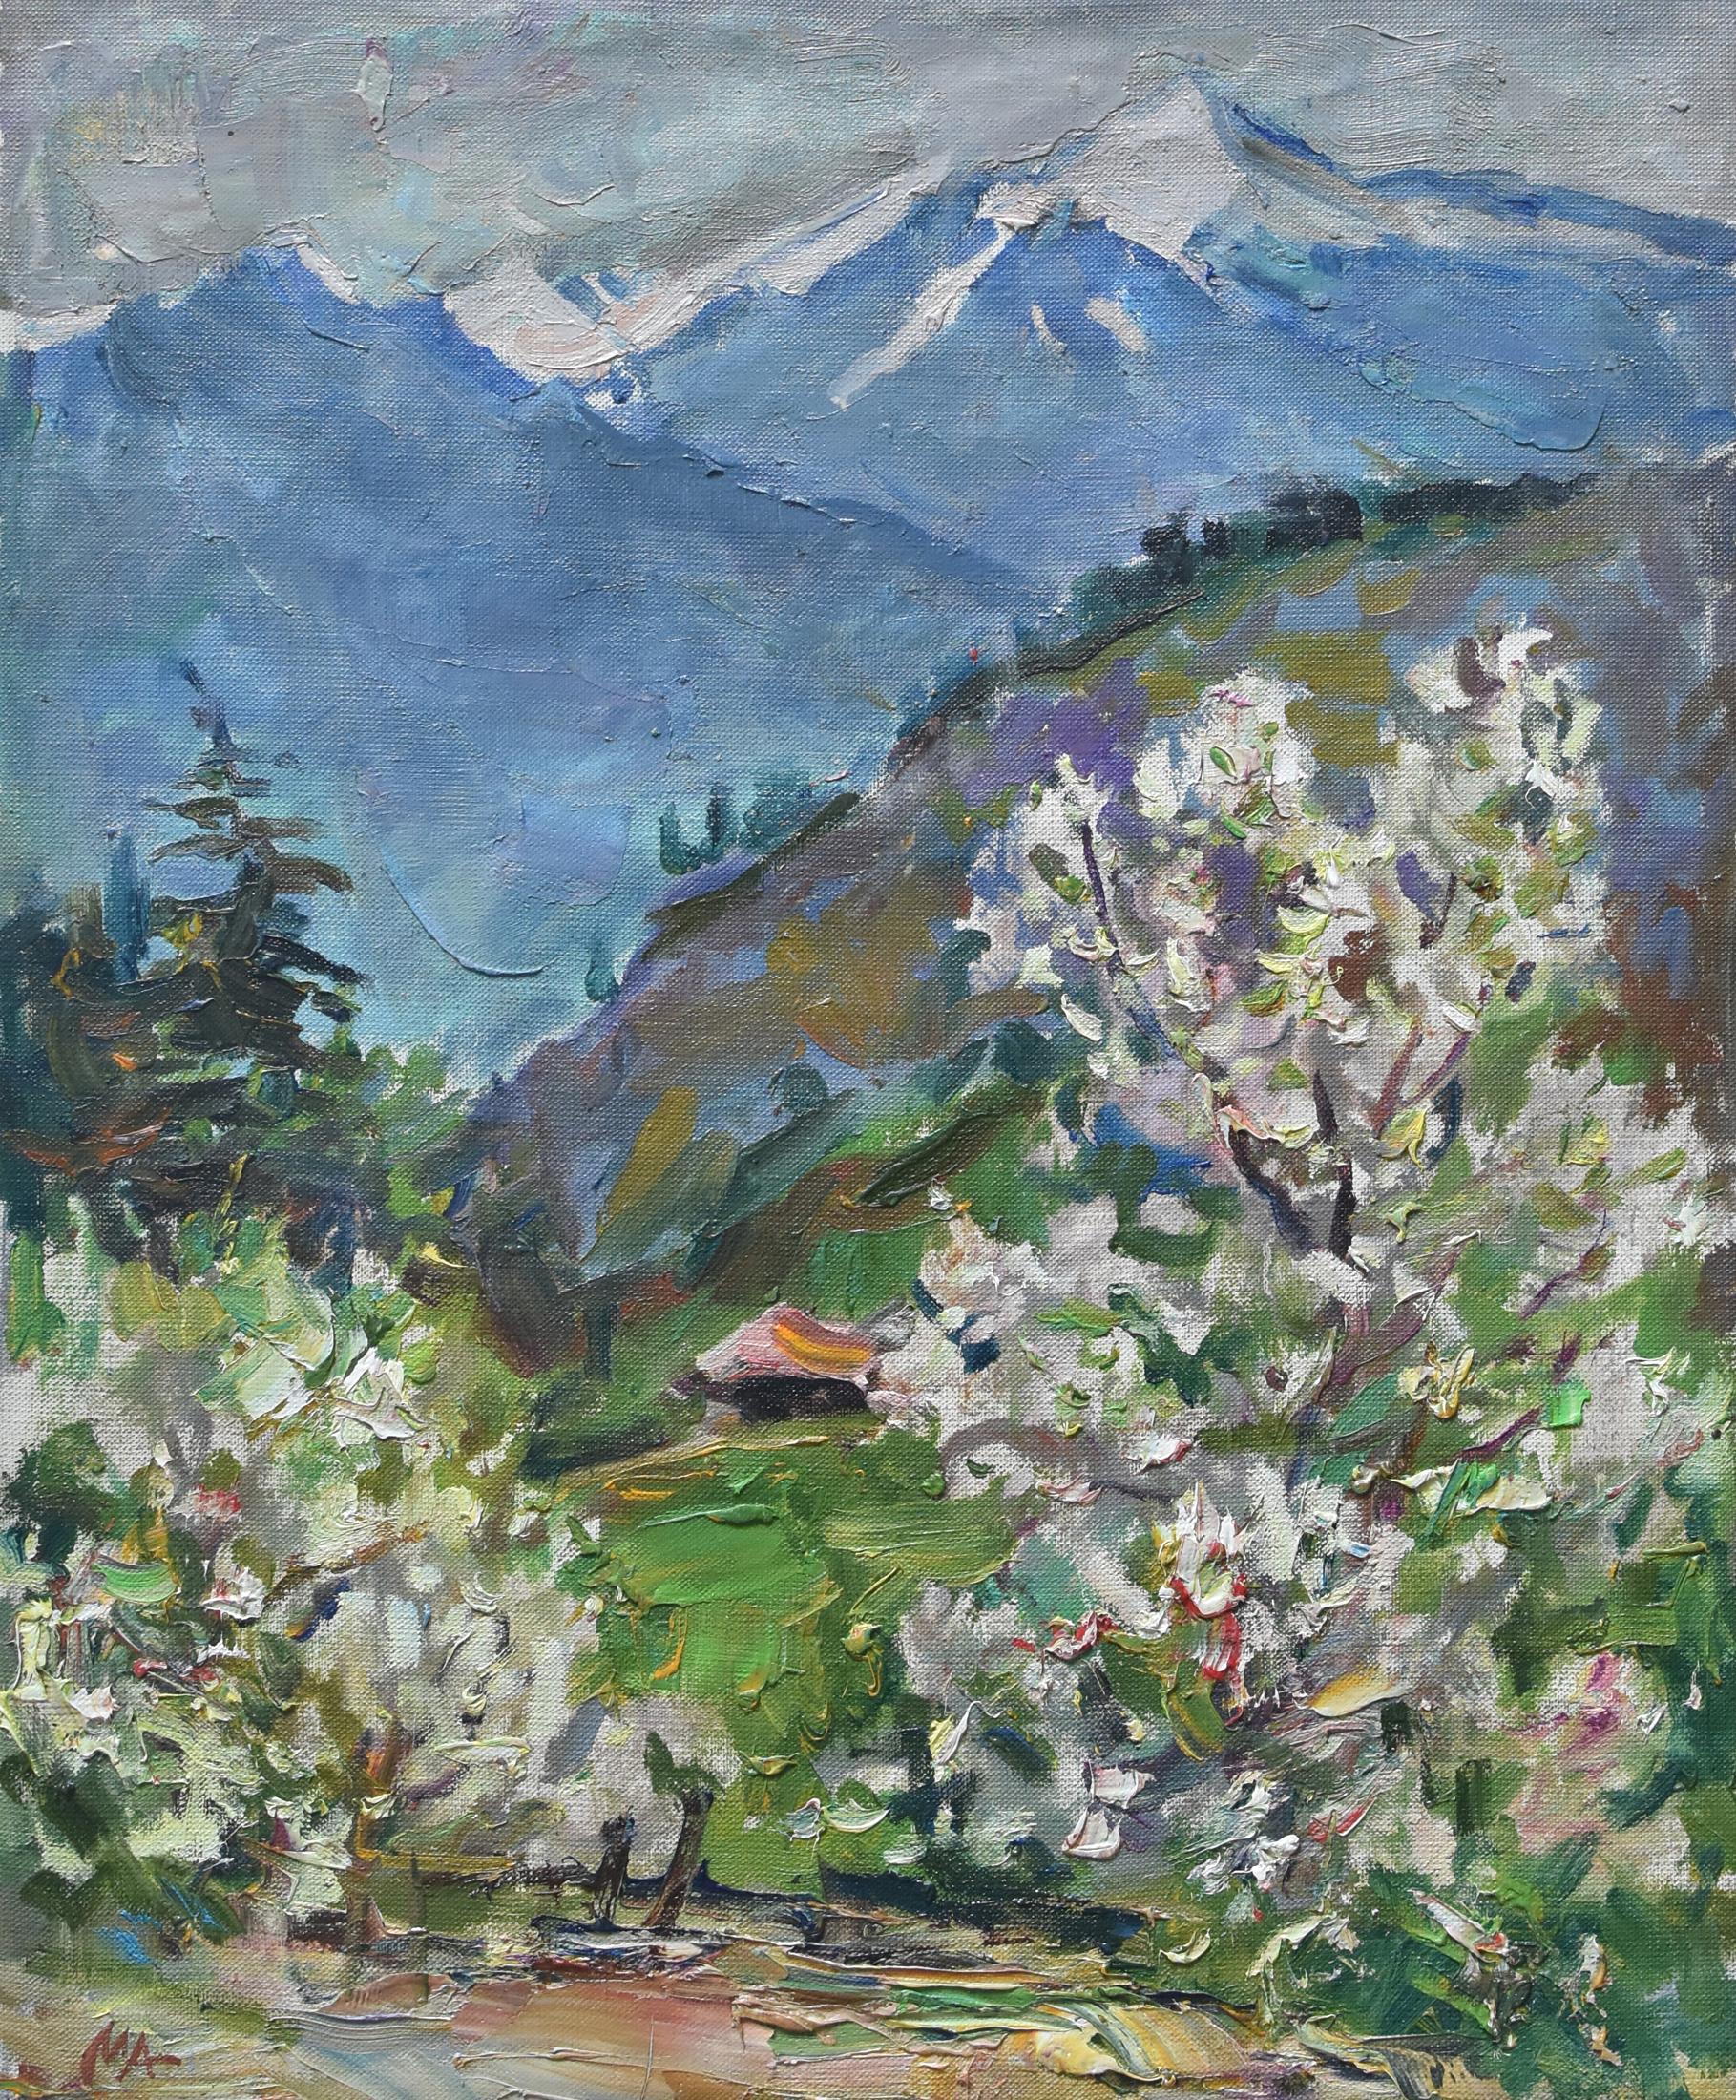 Spring at the mountains. Original modern art painting